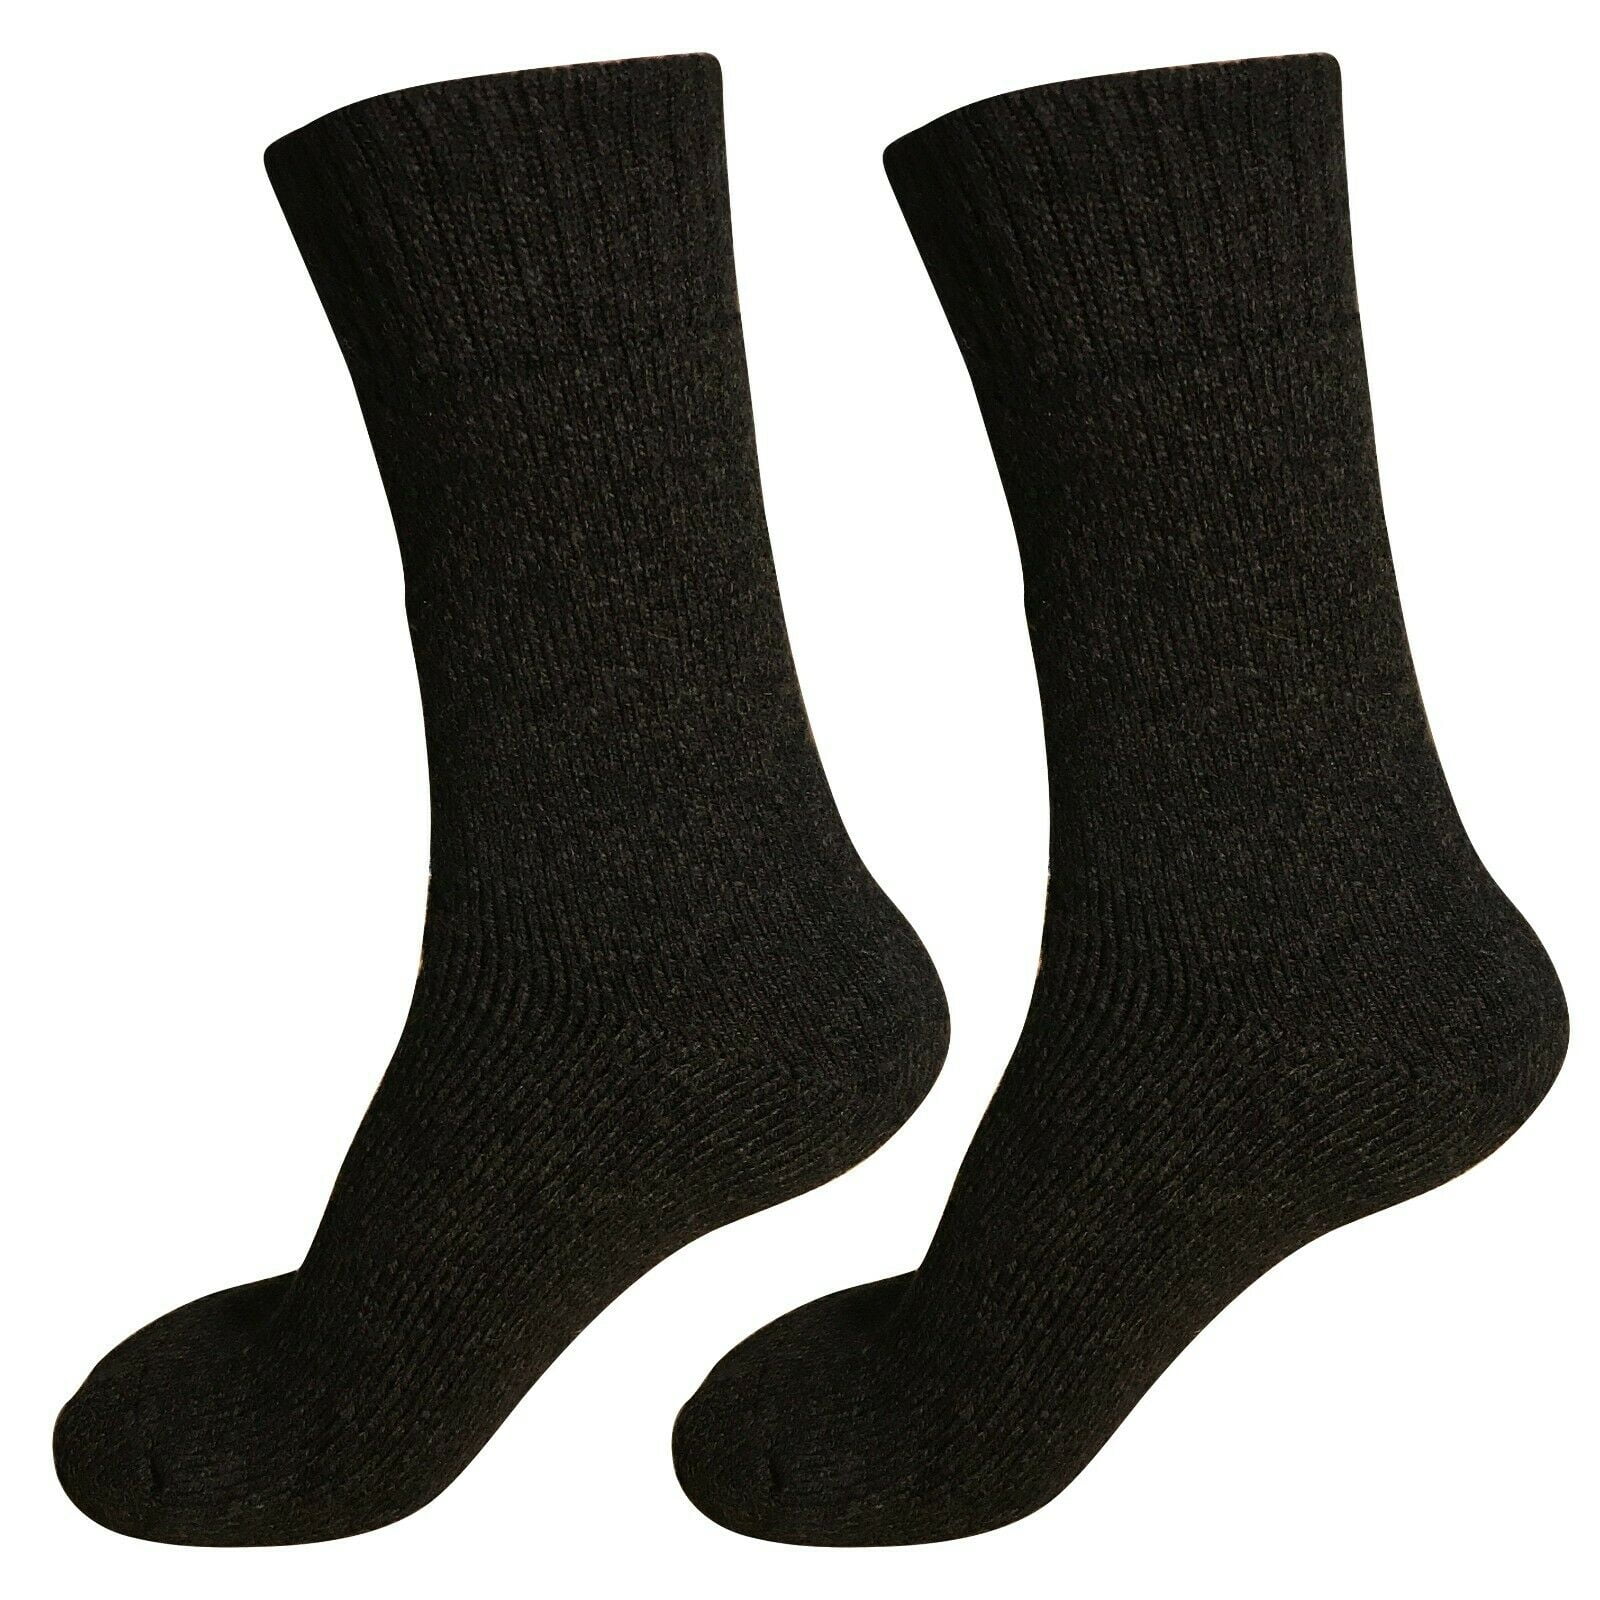 B&Q 2 Pairs Mens Heavy Duty Winter Socks Thick Thermal Warm Hiking Knit ...